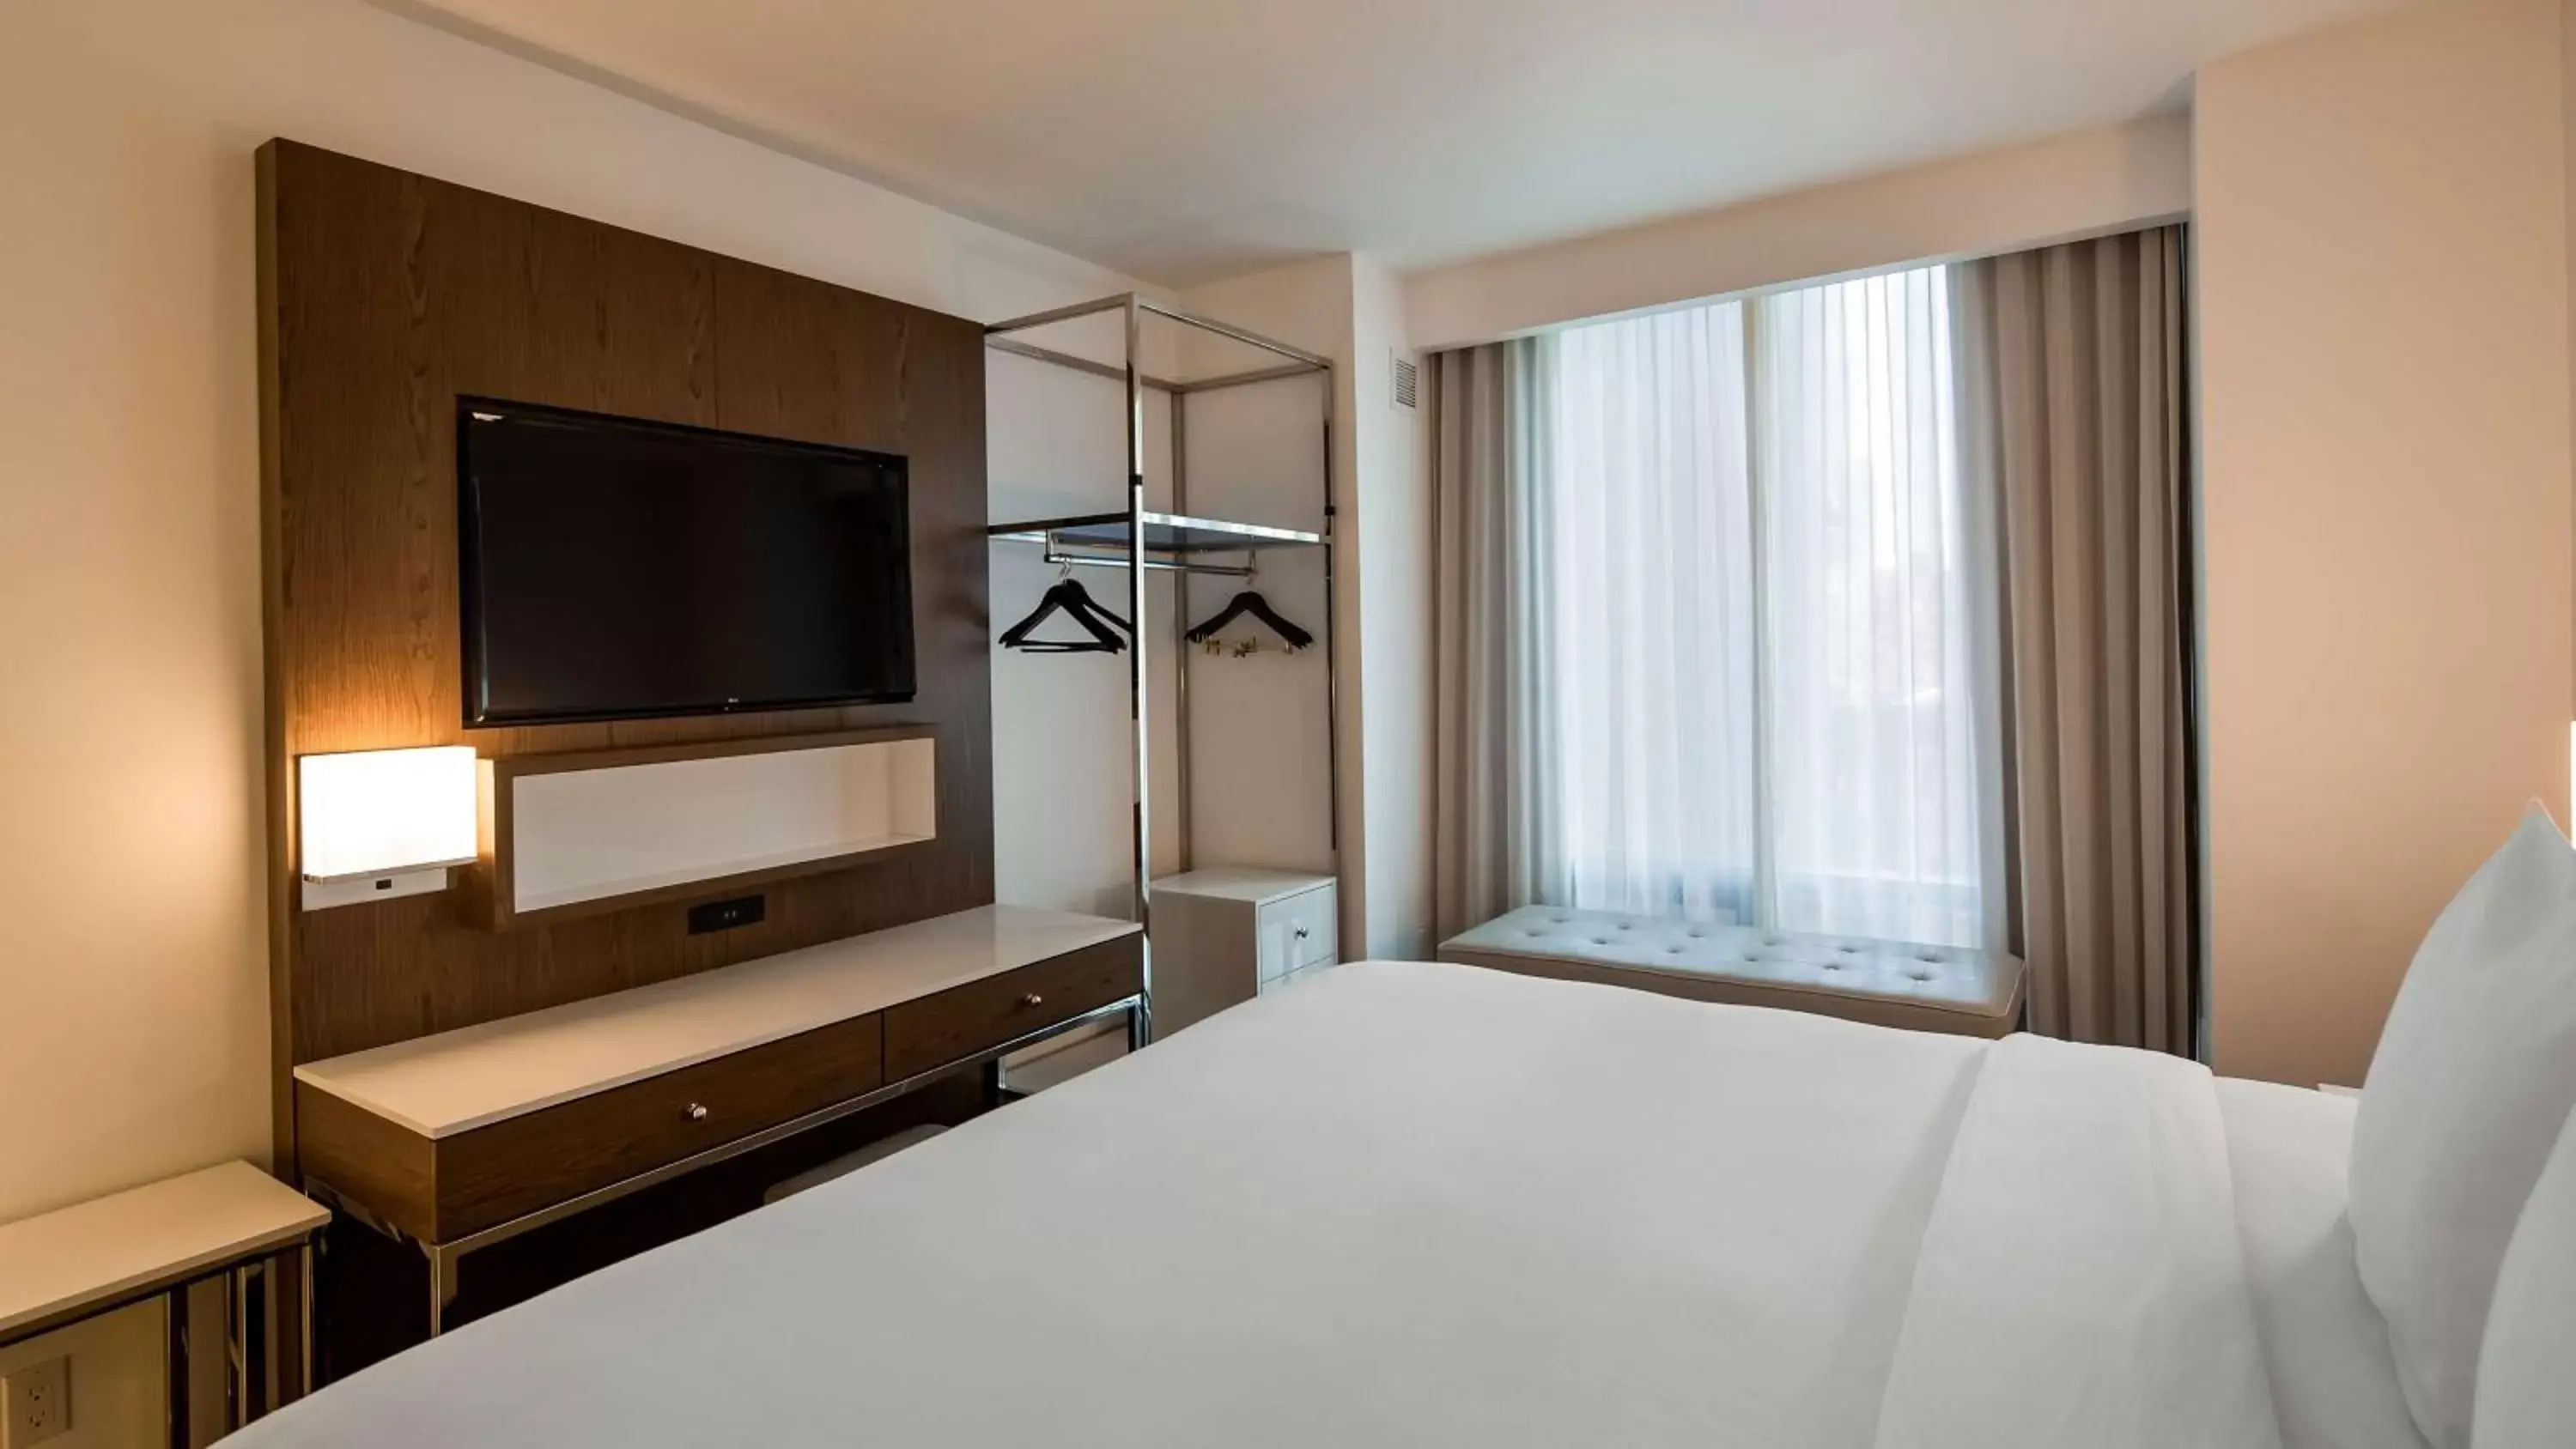 Bedroom, TV/Entertainment Center in Best Western Premier Empire State Hotel